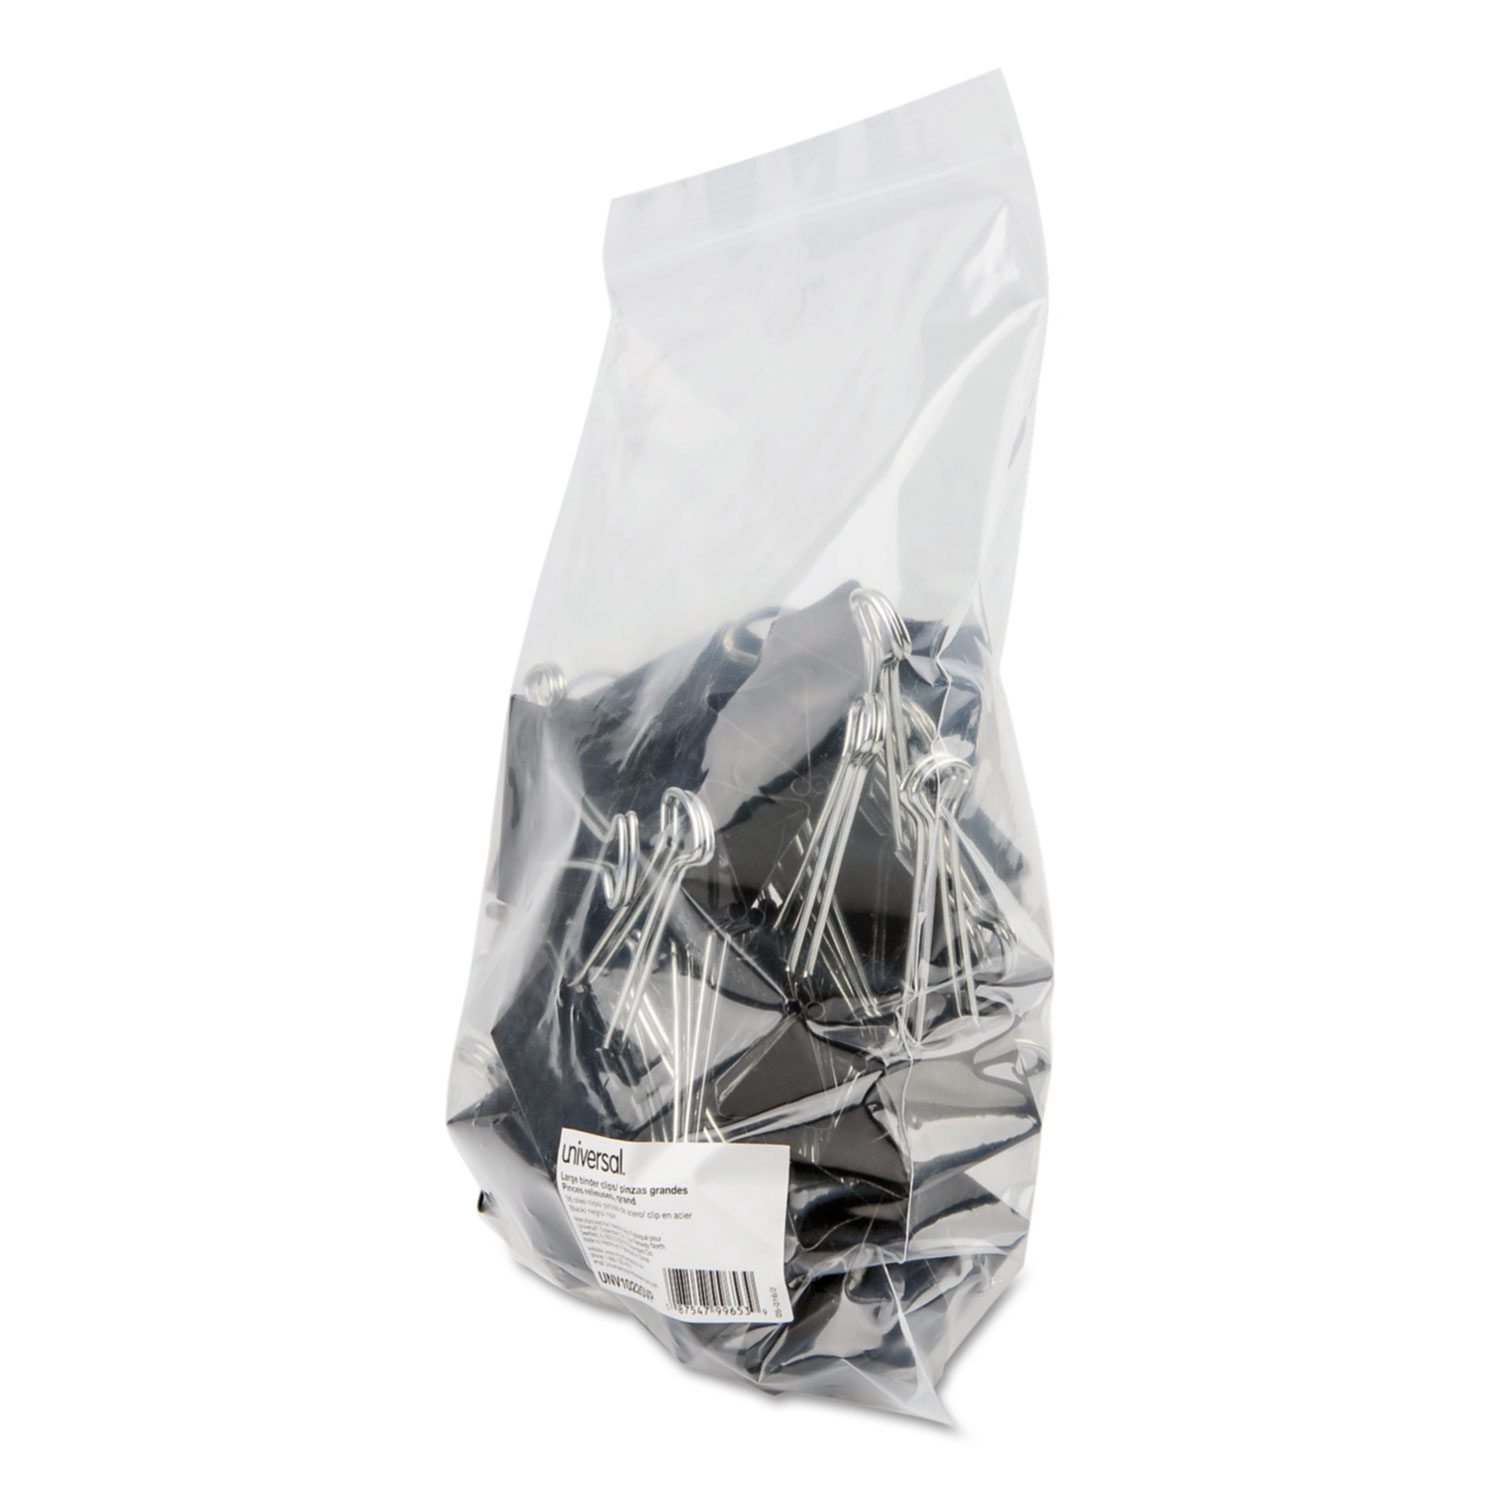 Binder Clips in Zip-Seal Bag, Large, Black/Silver, 36/Pack